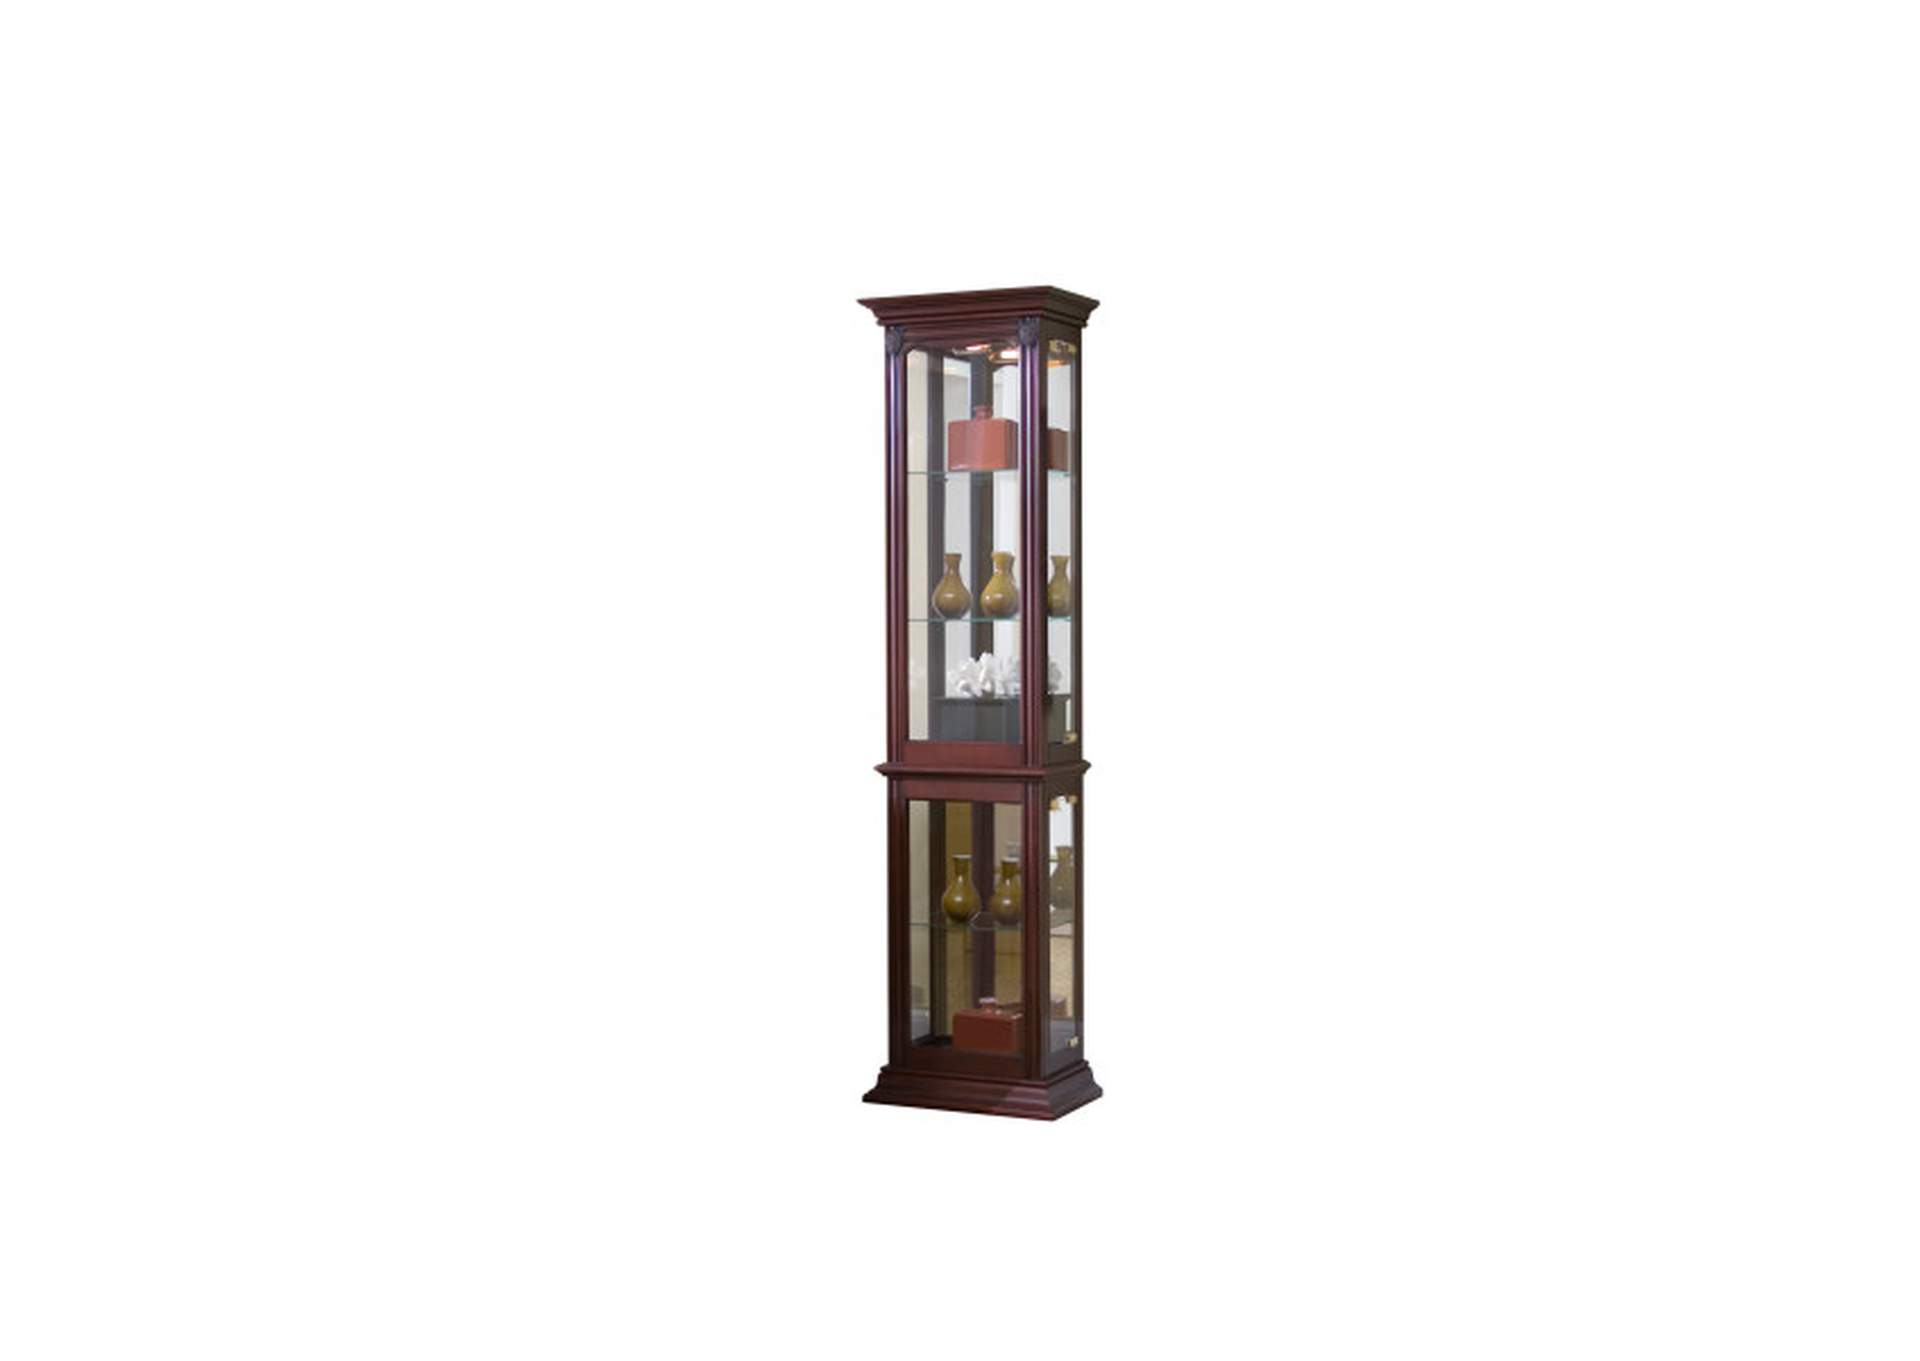 Gallery Style 4 Shelf Curio Cabinet in Warm Cherry Brown,Pulaski Furniture